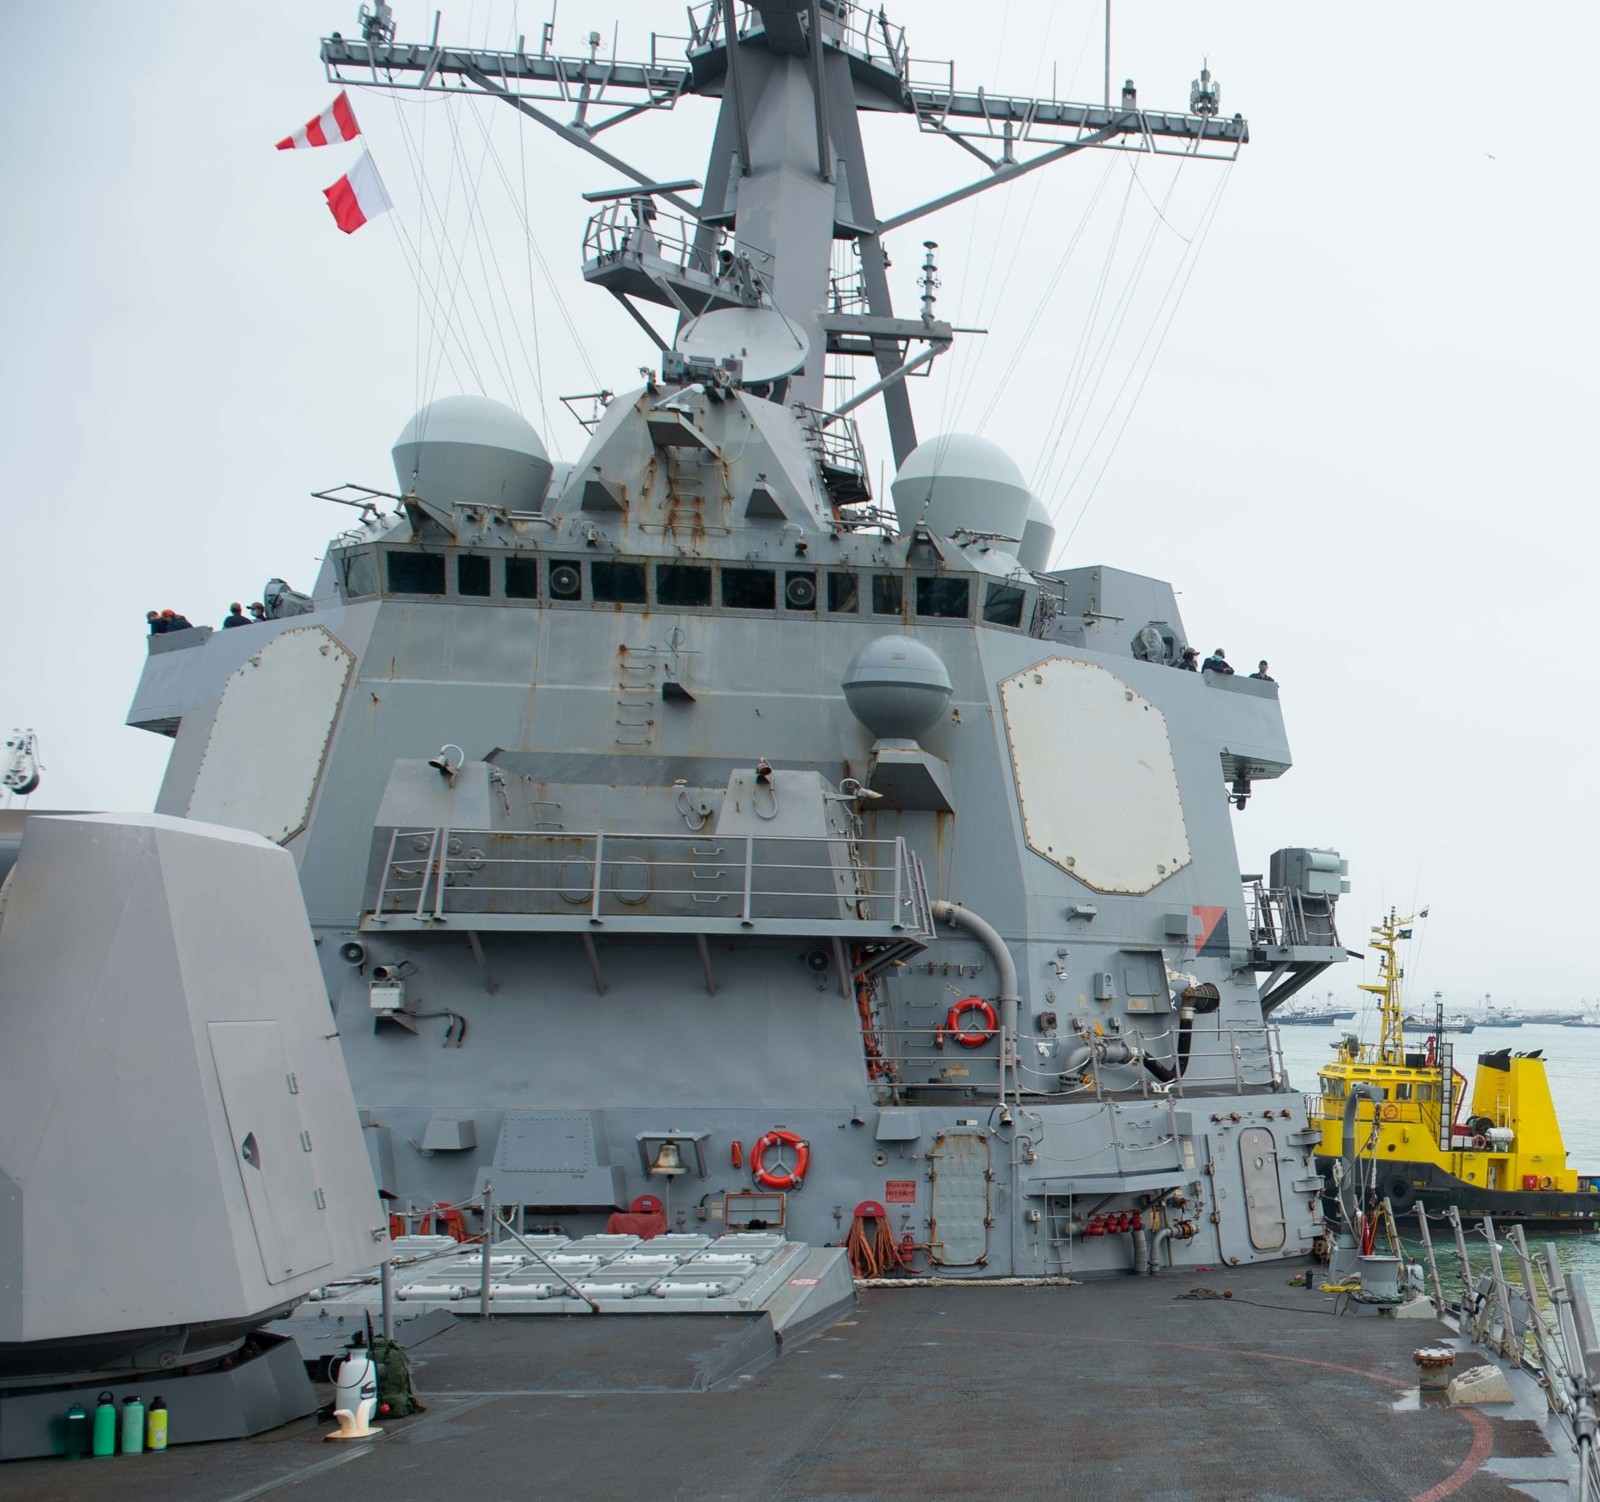 ddg-110 uss william p. lawrence arleigh burke class guided missile destroyer aegis us navy manta ecuador 74